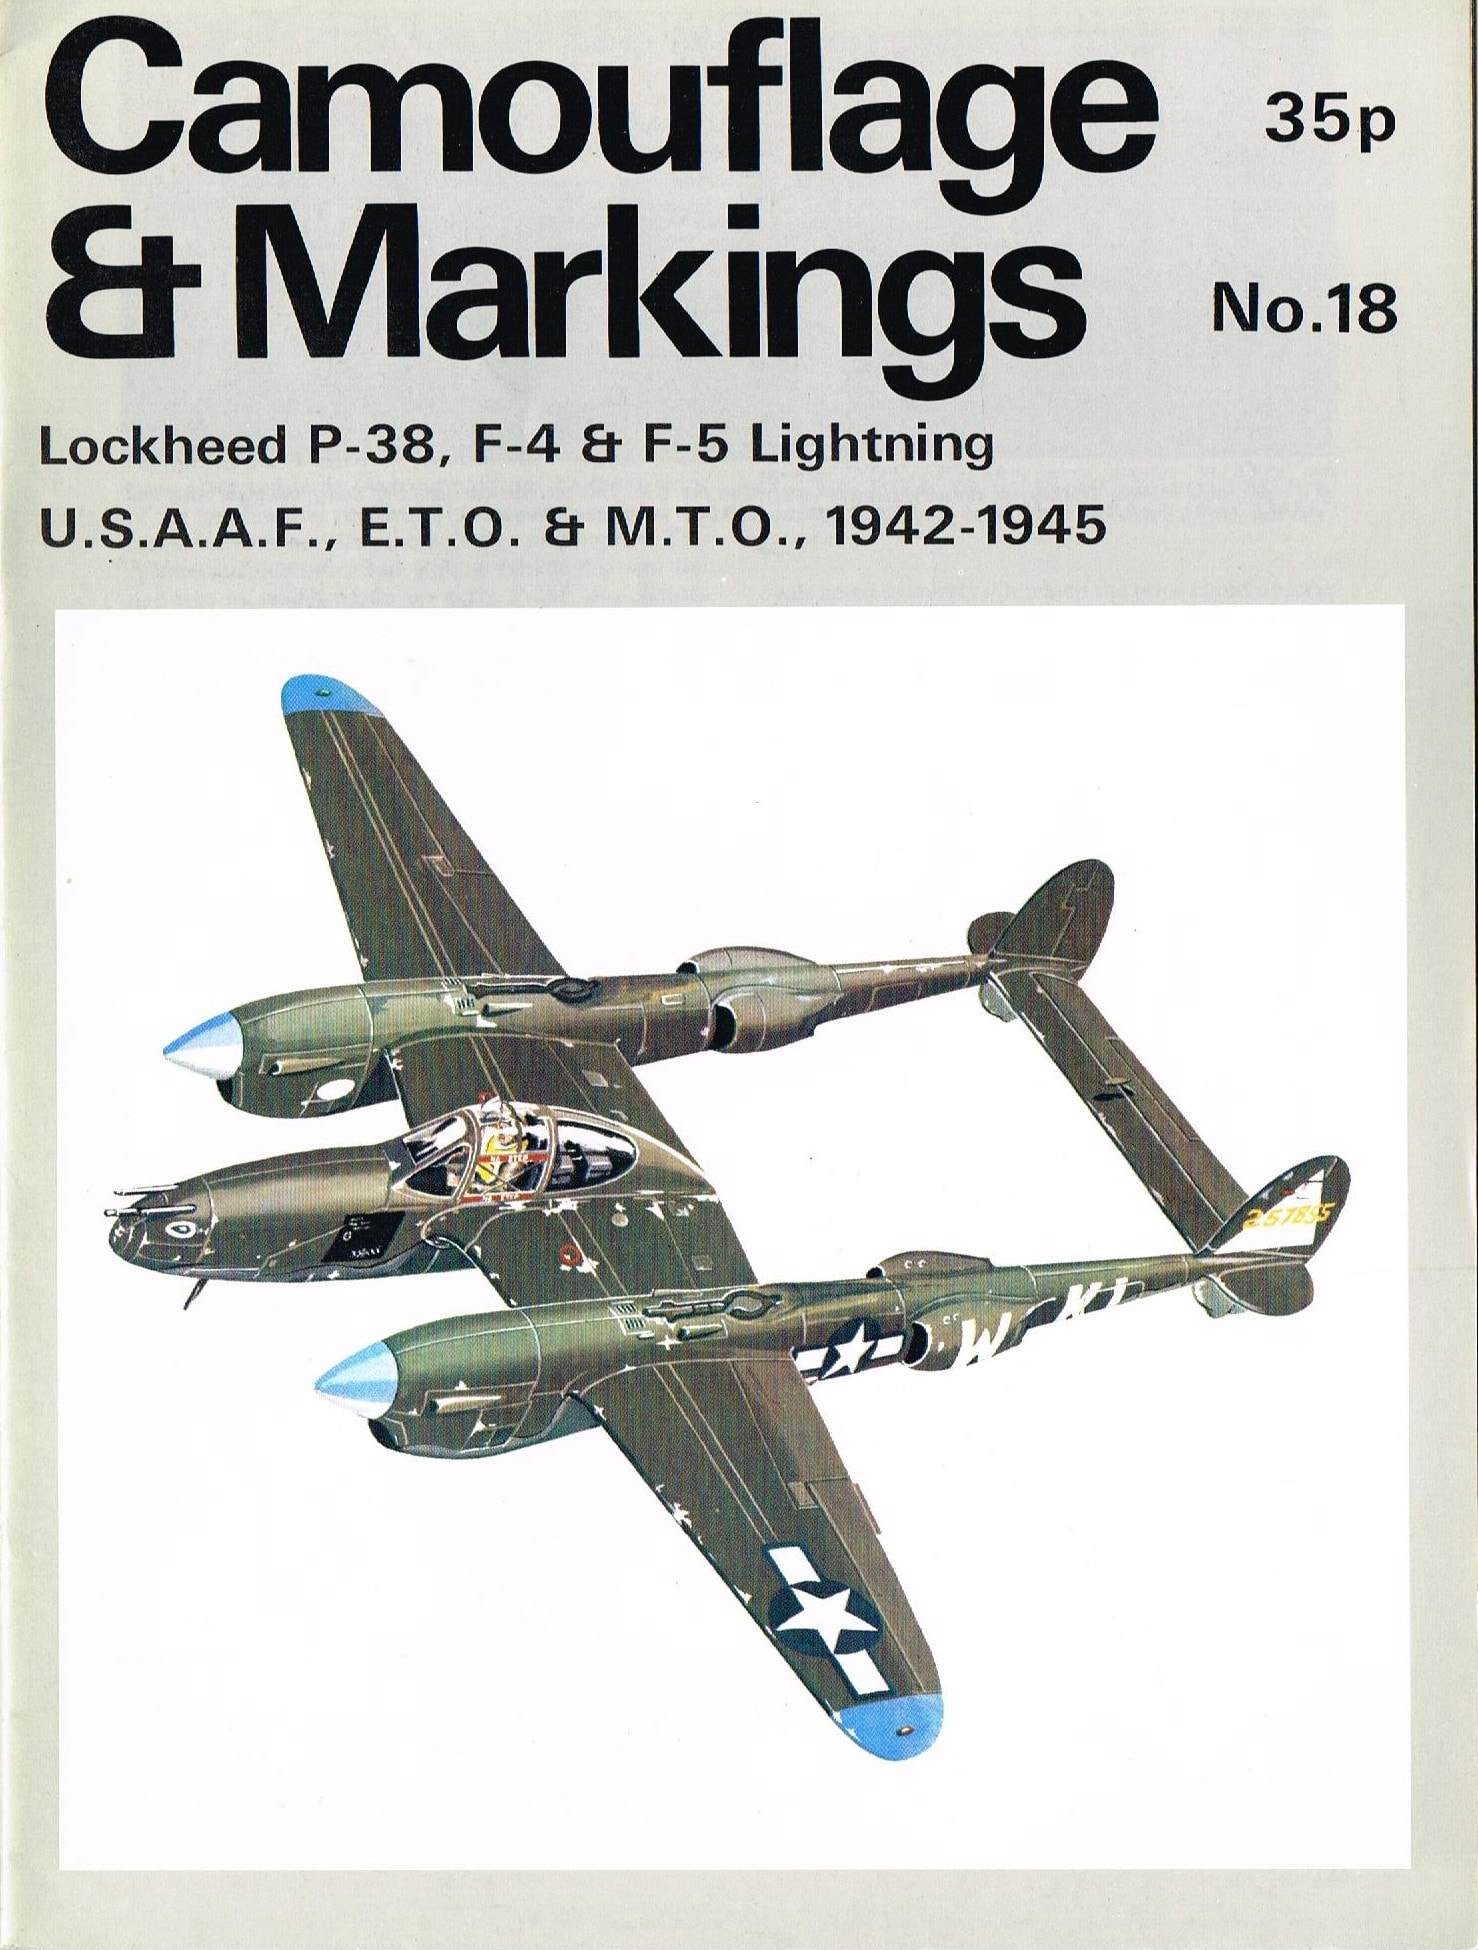 Lockheed P-38F Lightning – 41-7644 - Wings Tracks Guns